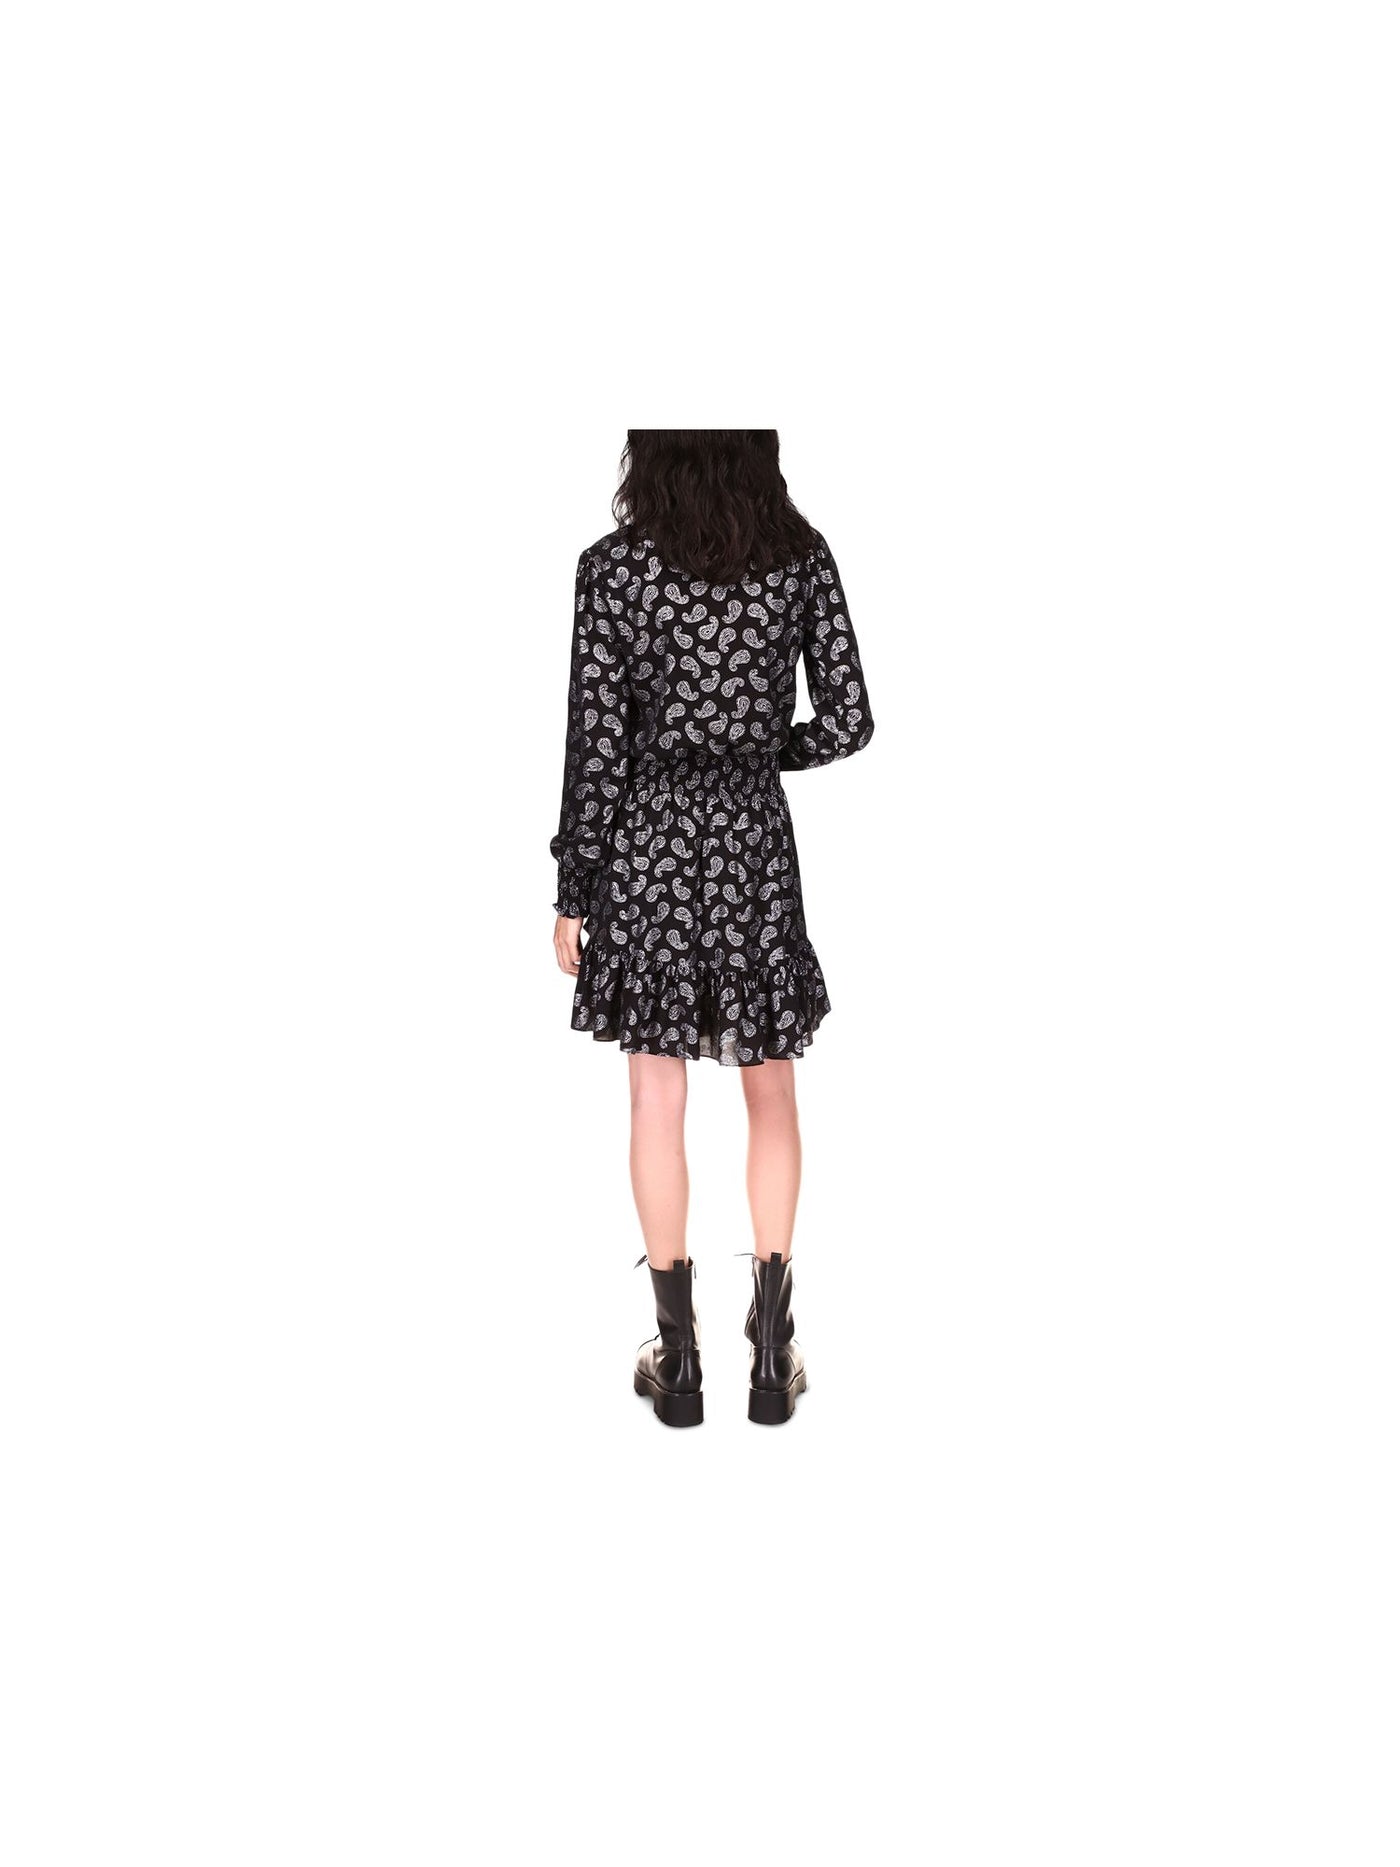 MICHAEL KORS Womens Black Smocked Ruffled Pullover Long Sleeve V Neck Short Faux Wrap Dress XS